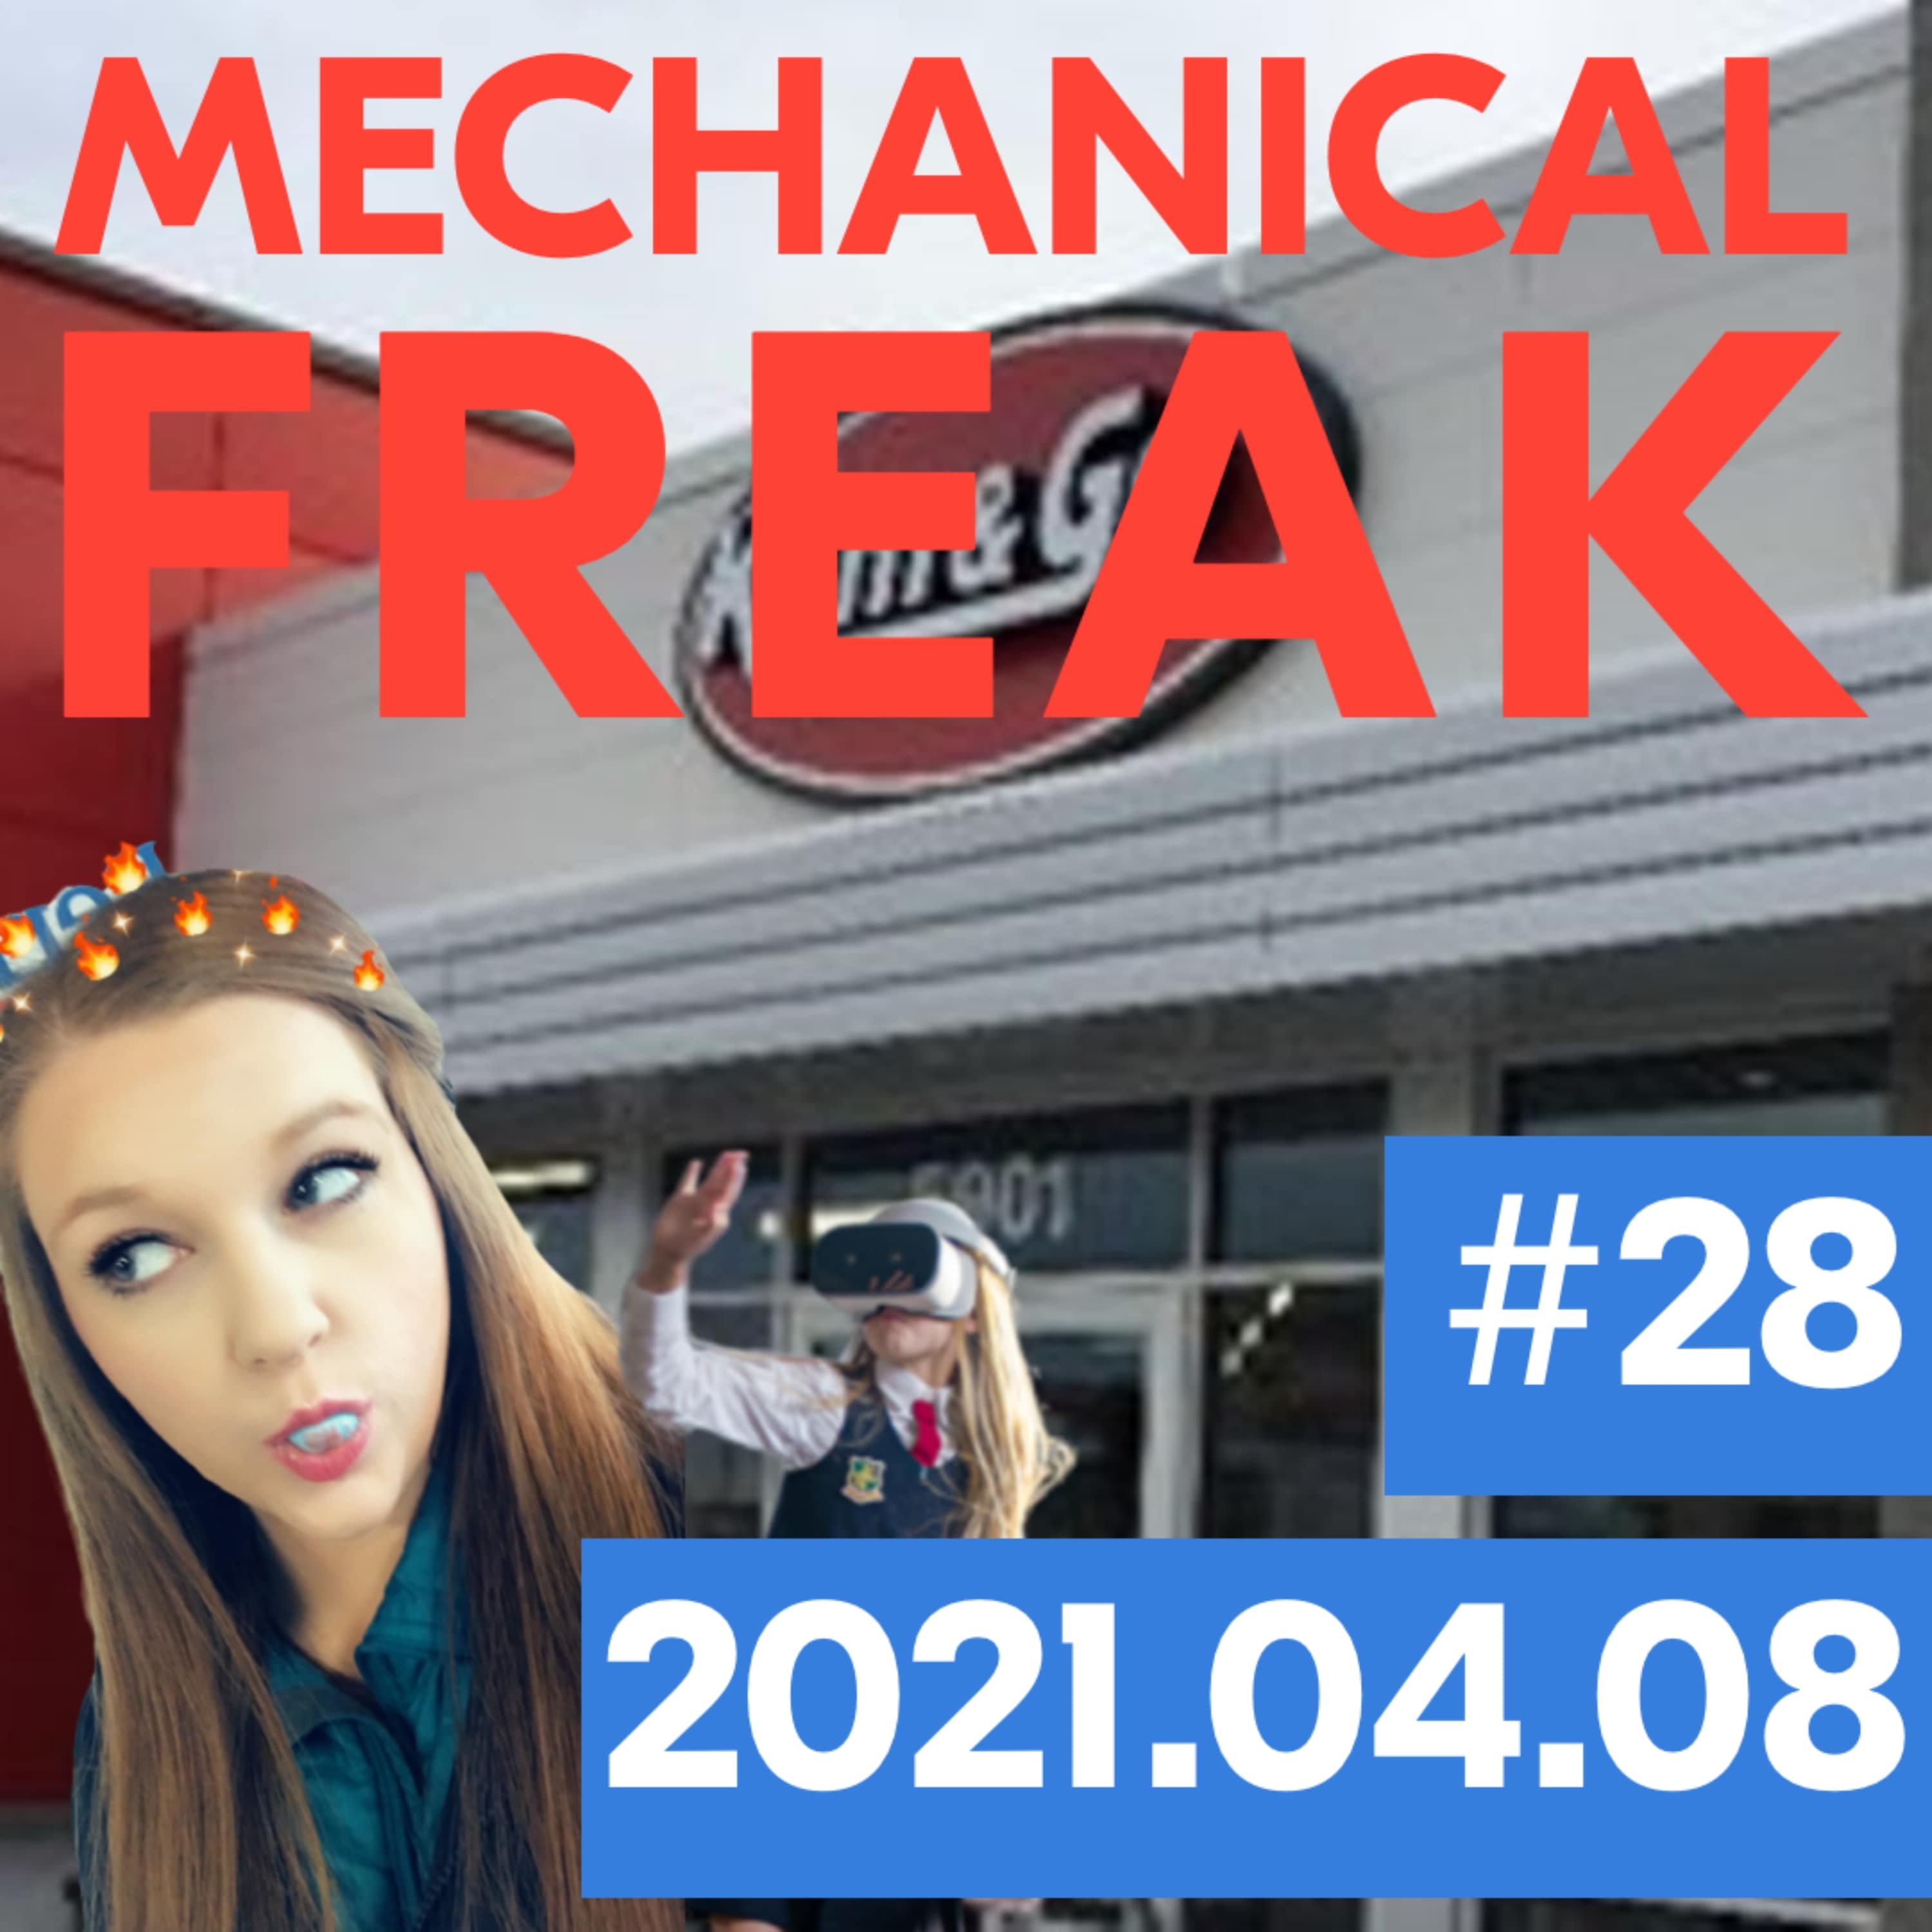 Episode #mechanical-freak-43.5 cover